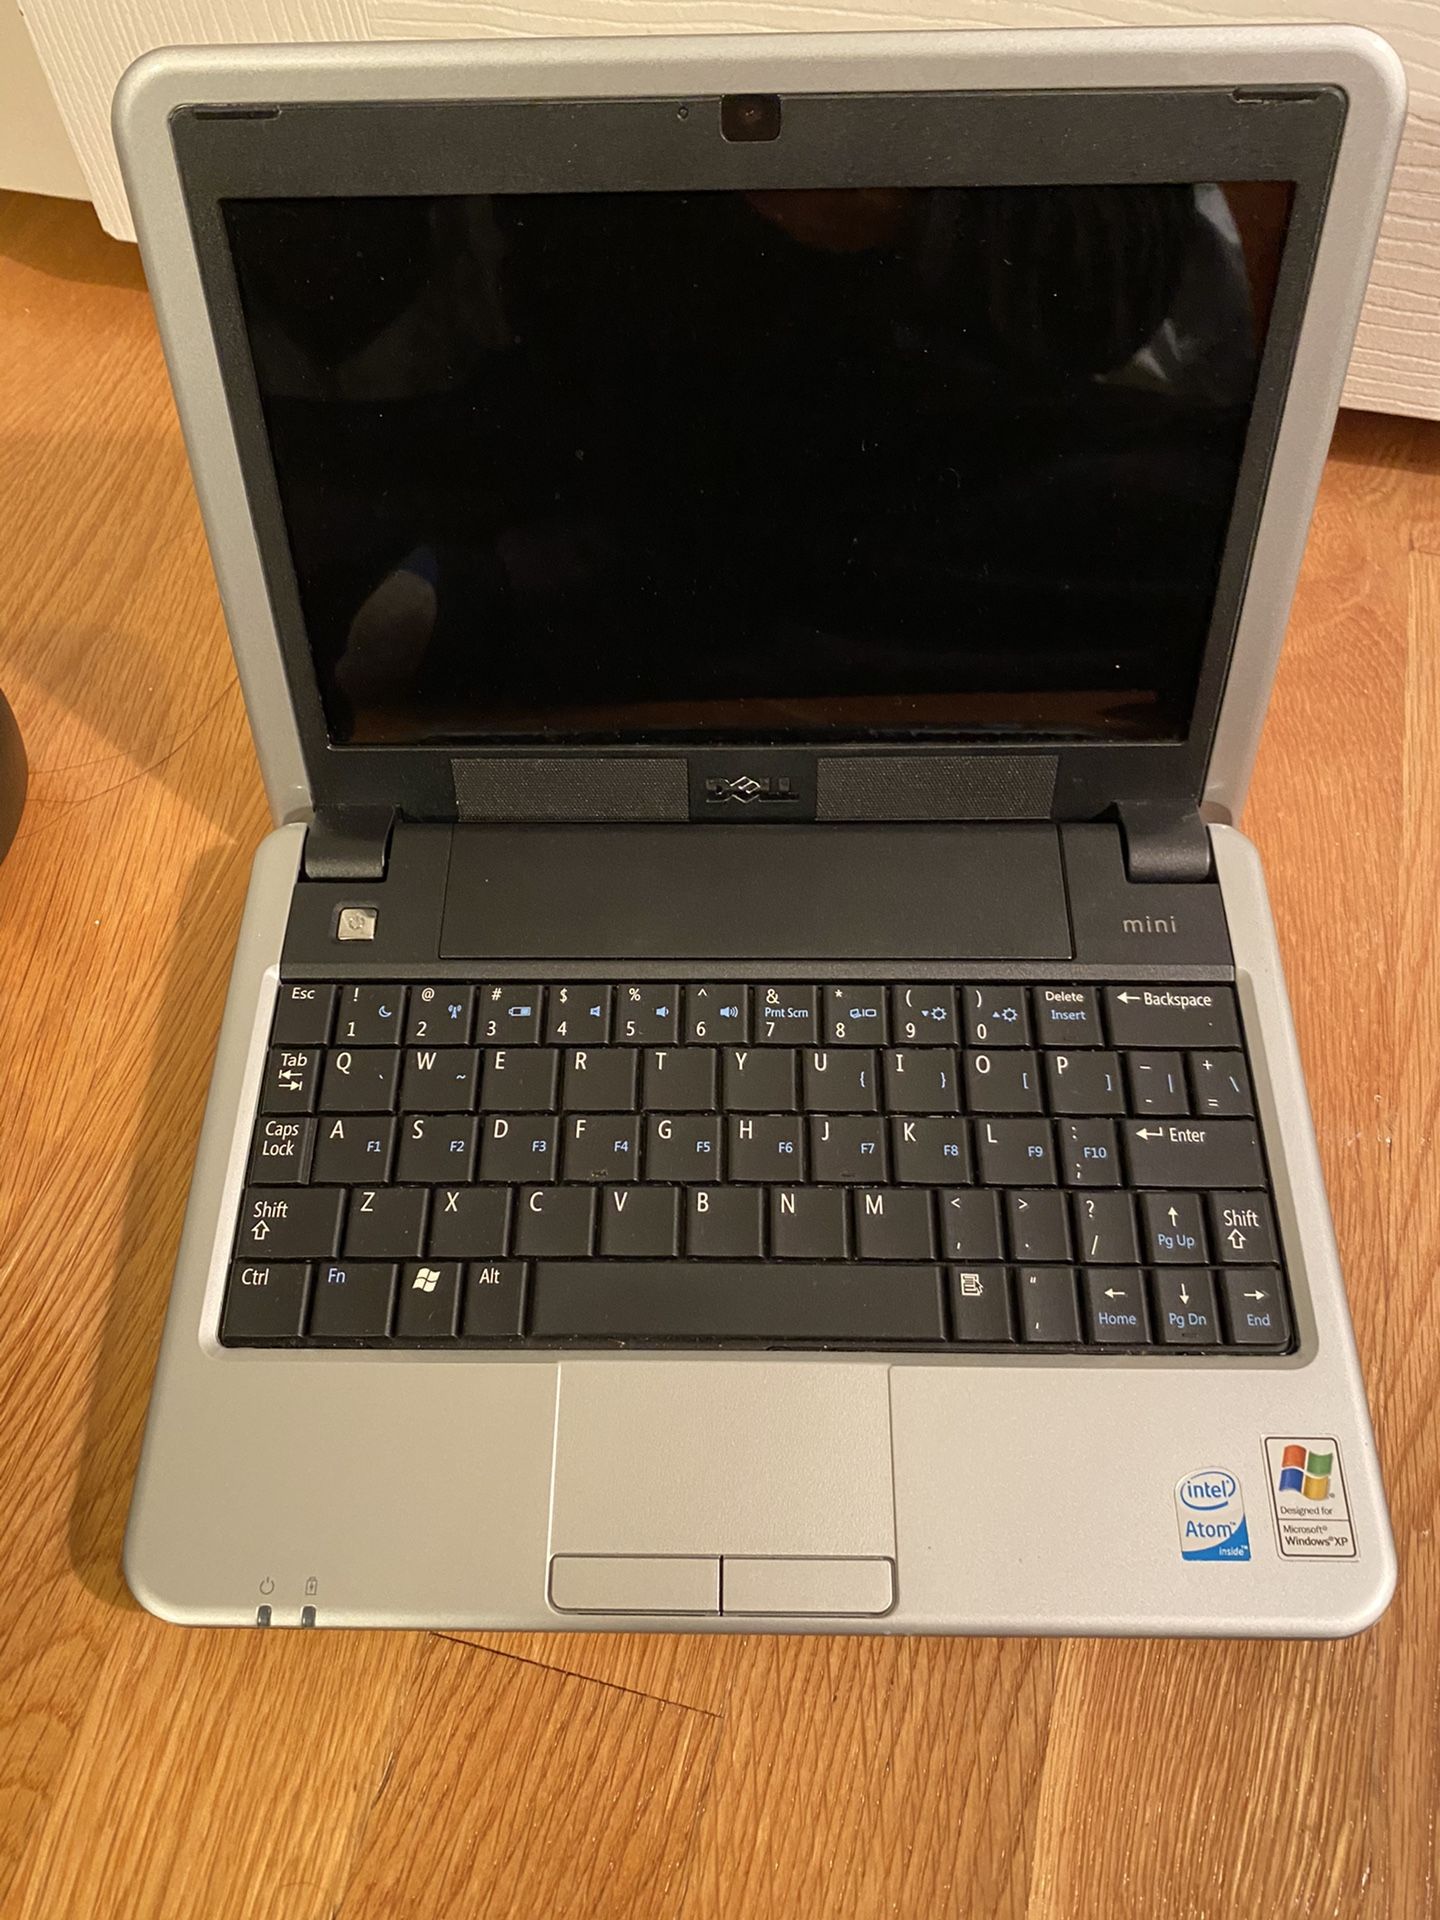 Dell Inspiron 910 Mini Laptop